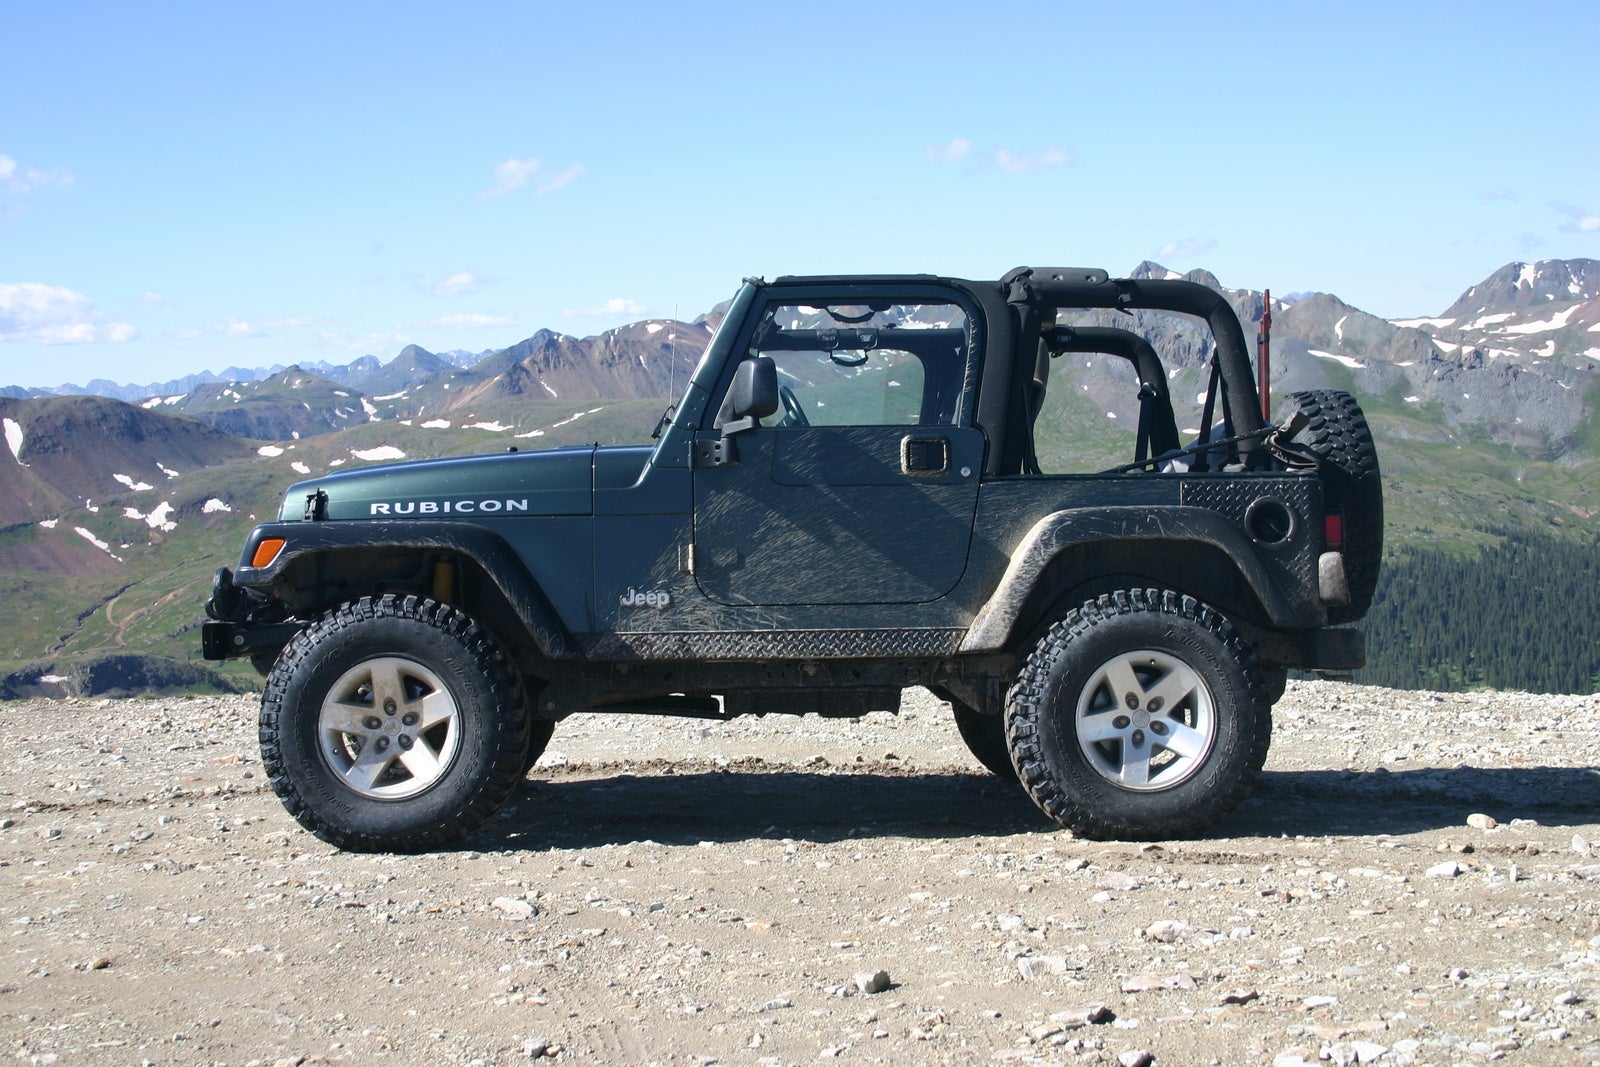 2003 Jeep wrangler rubicon colors #4